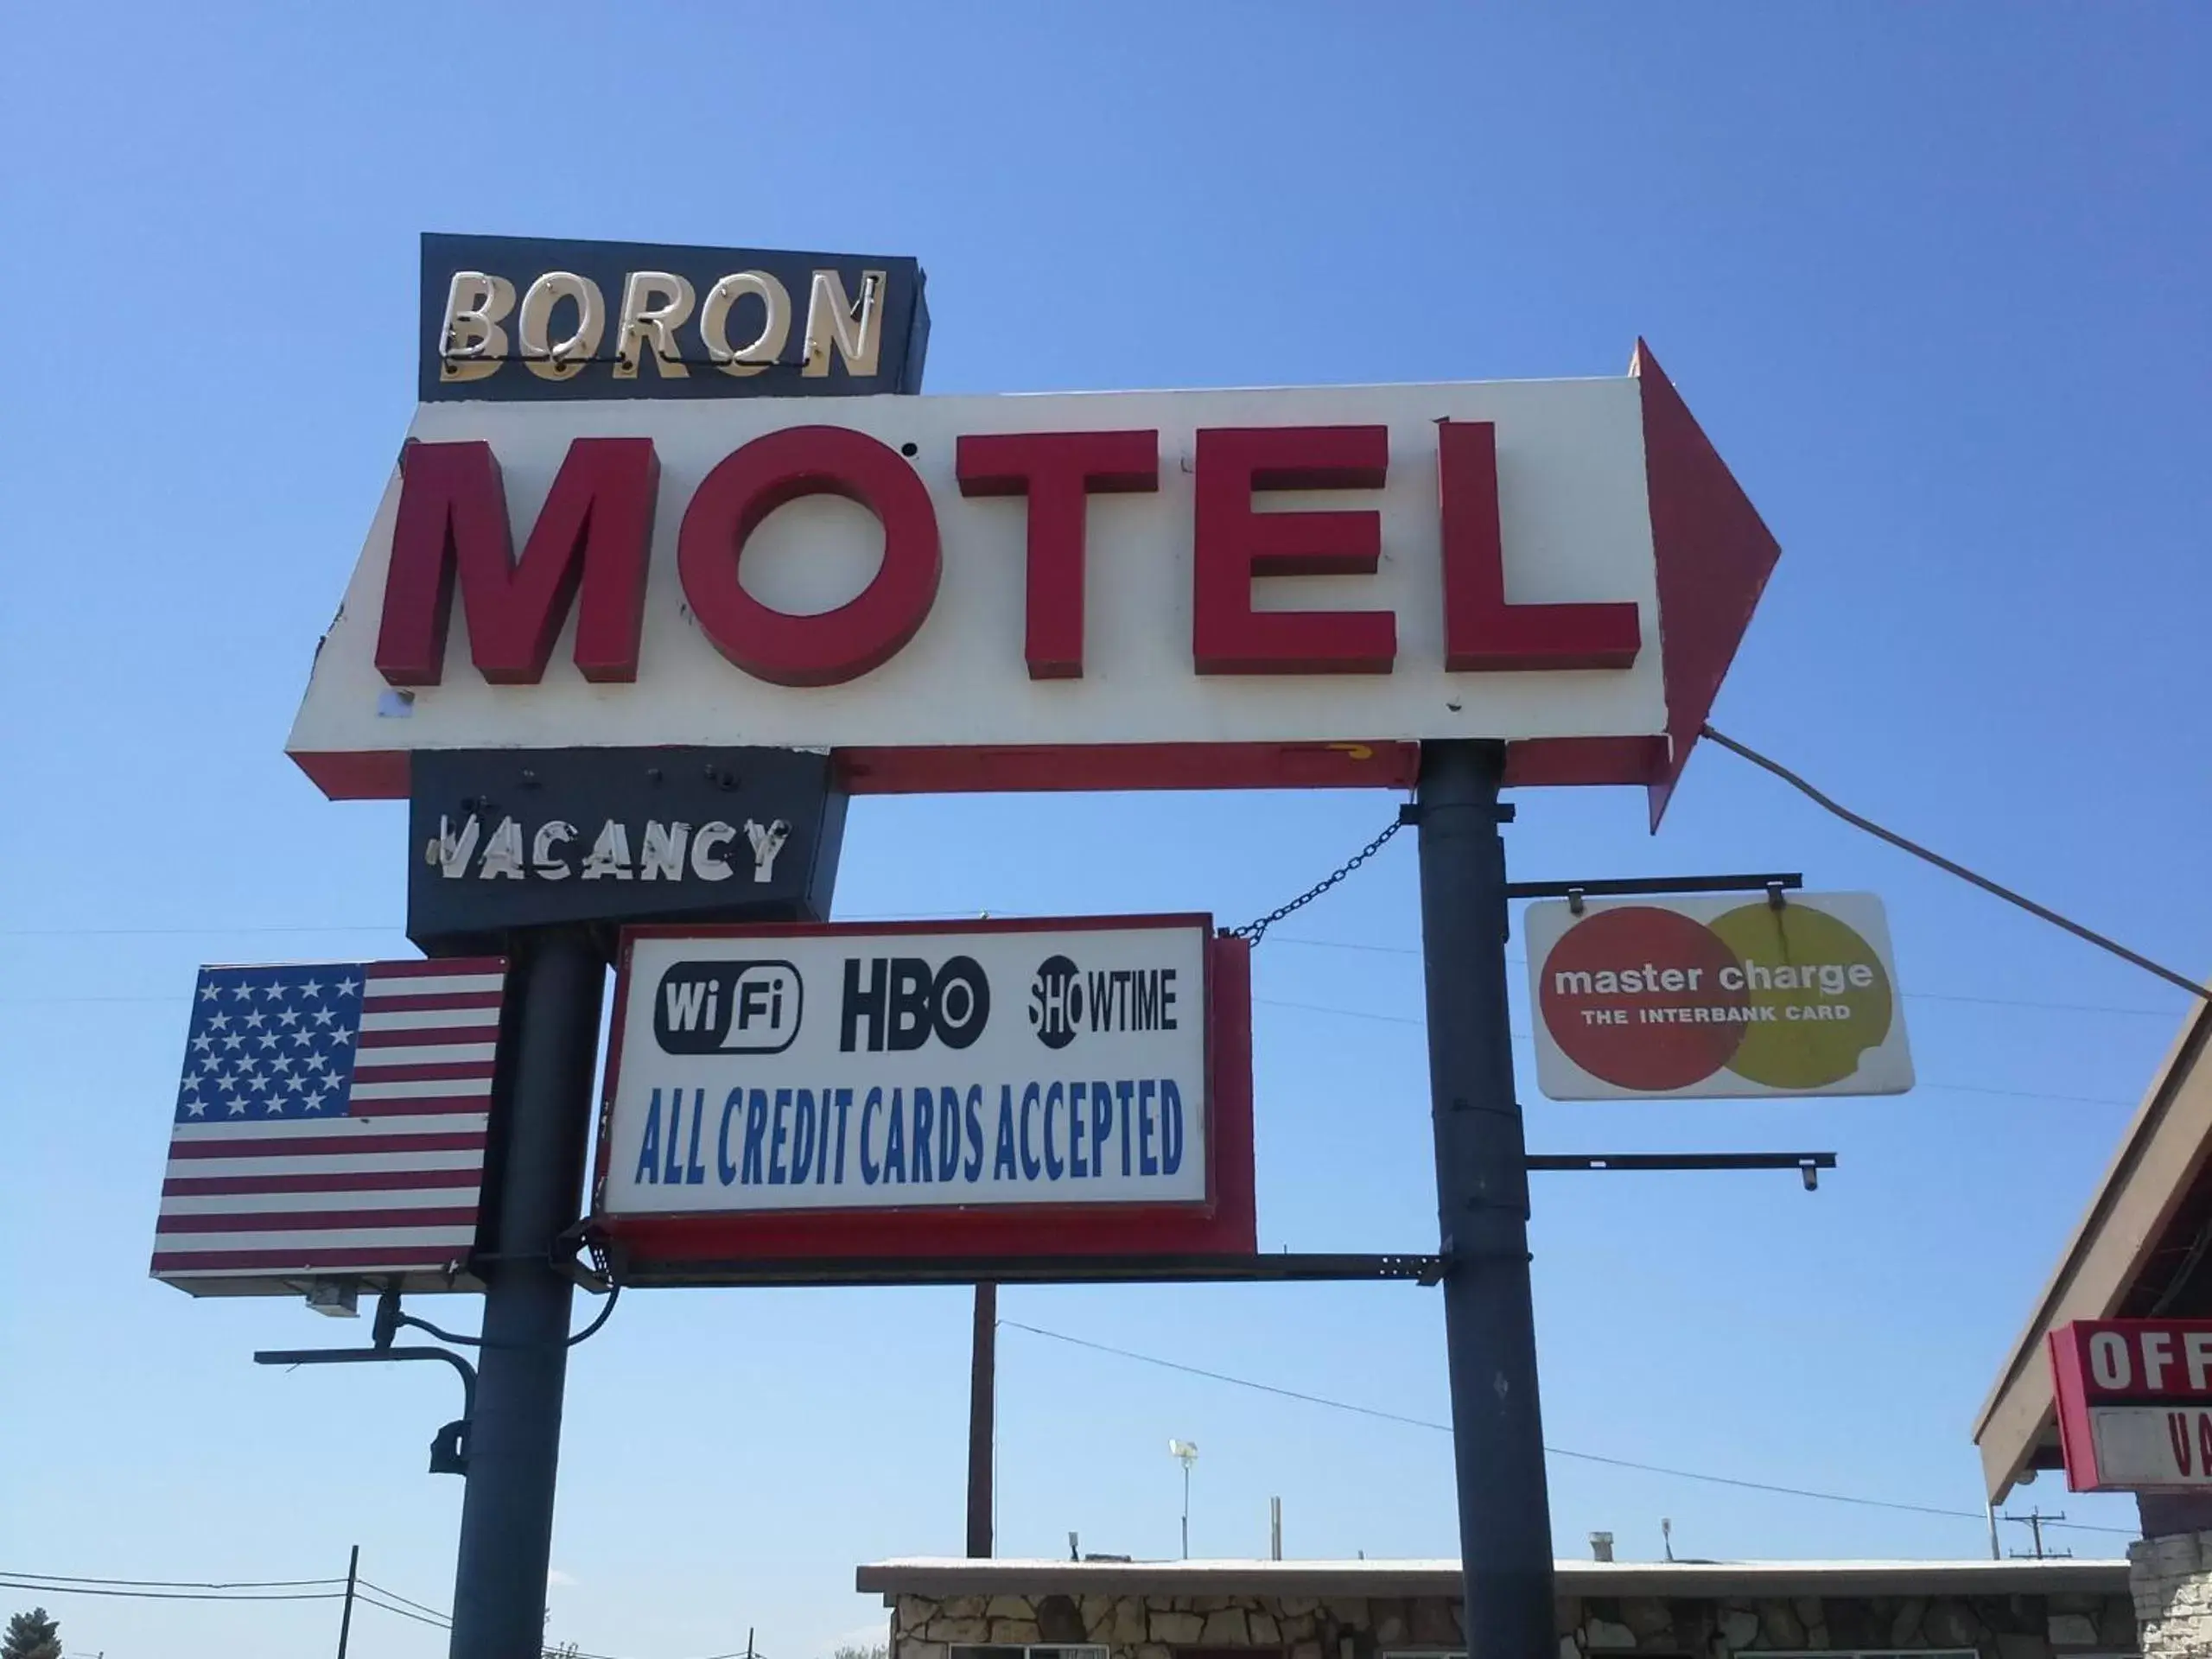 Property logo or sign in Boron Motel